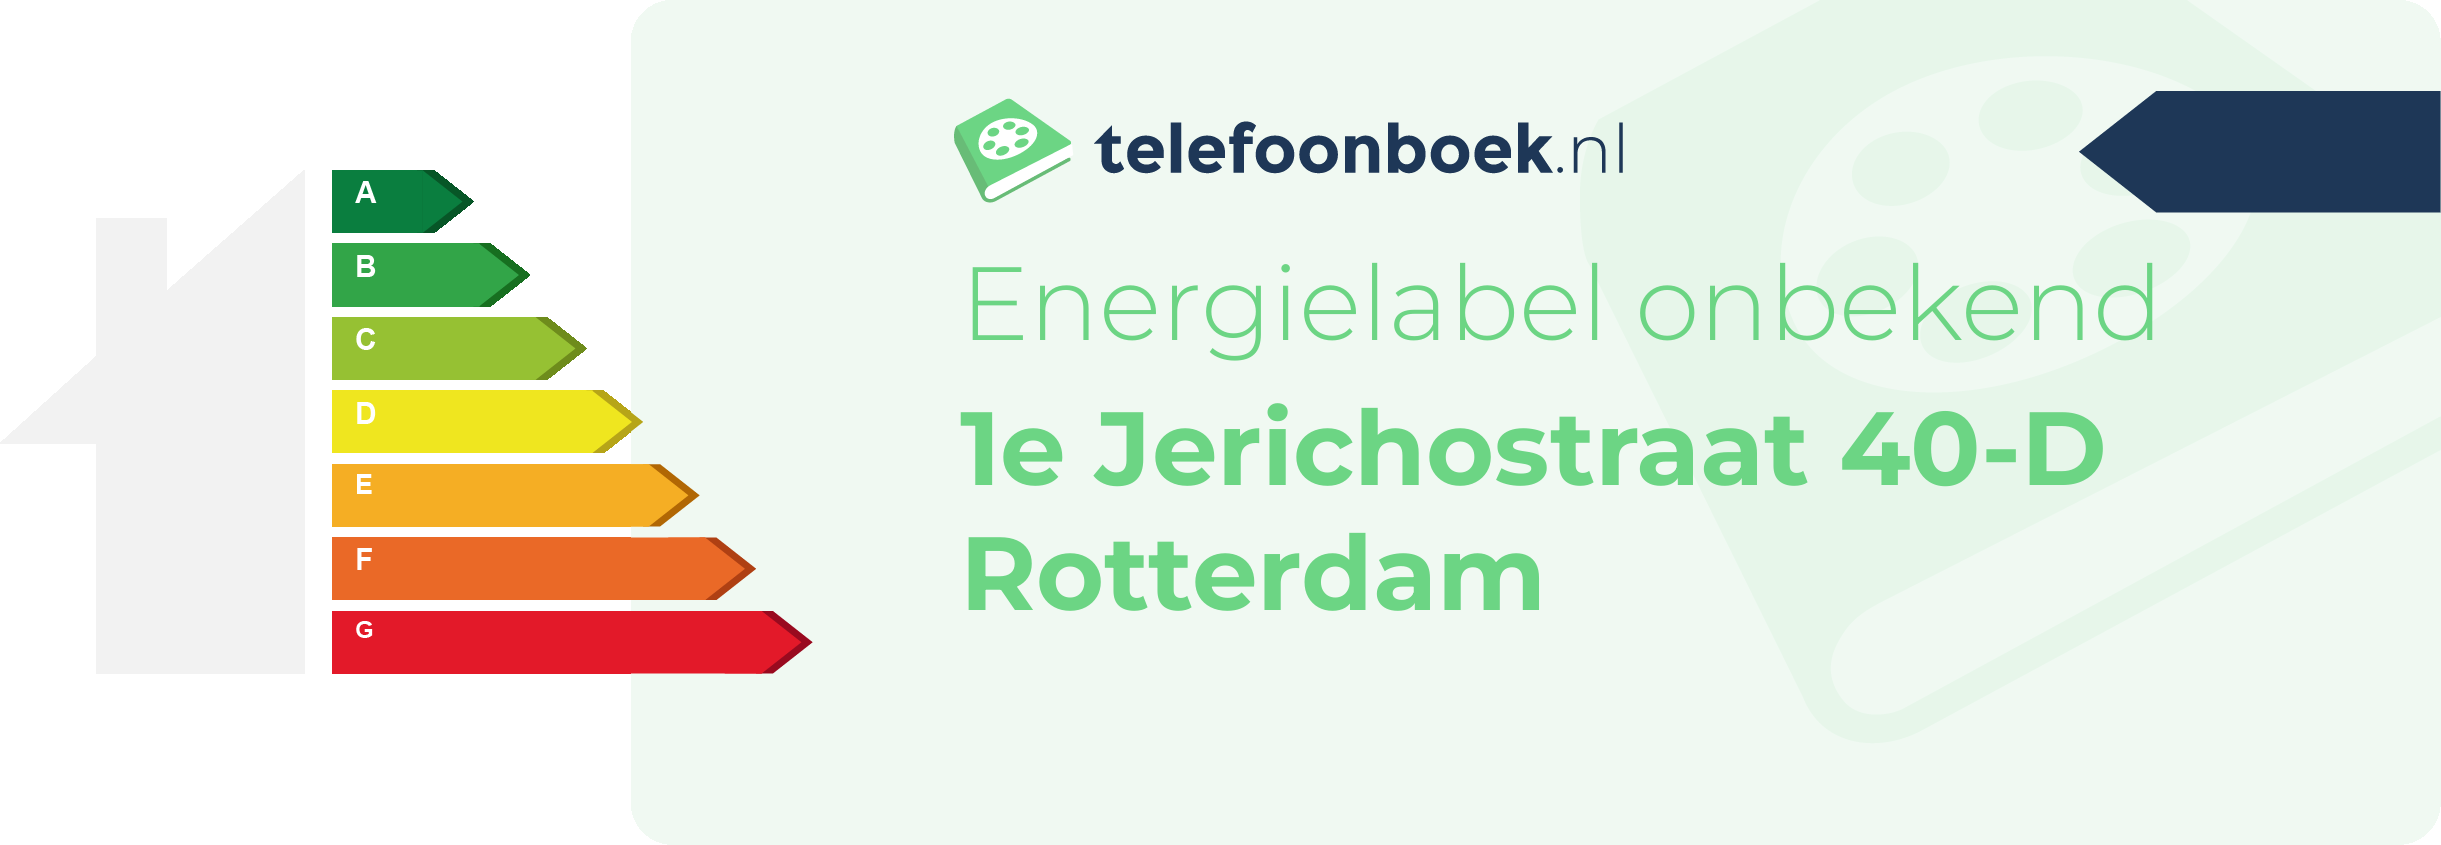 Energielabel 1e Jerichostraat 40-D Rotterdam